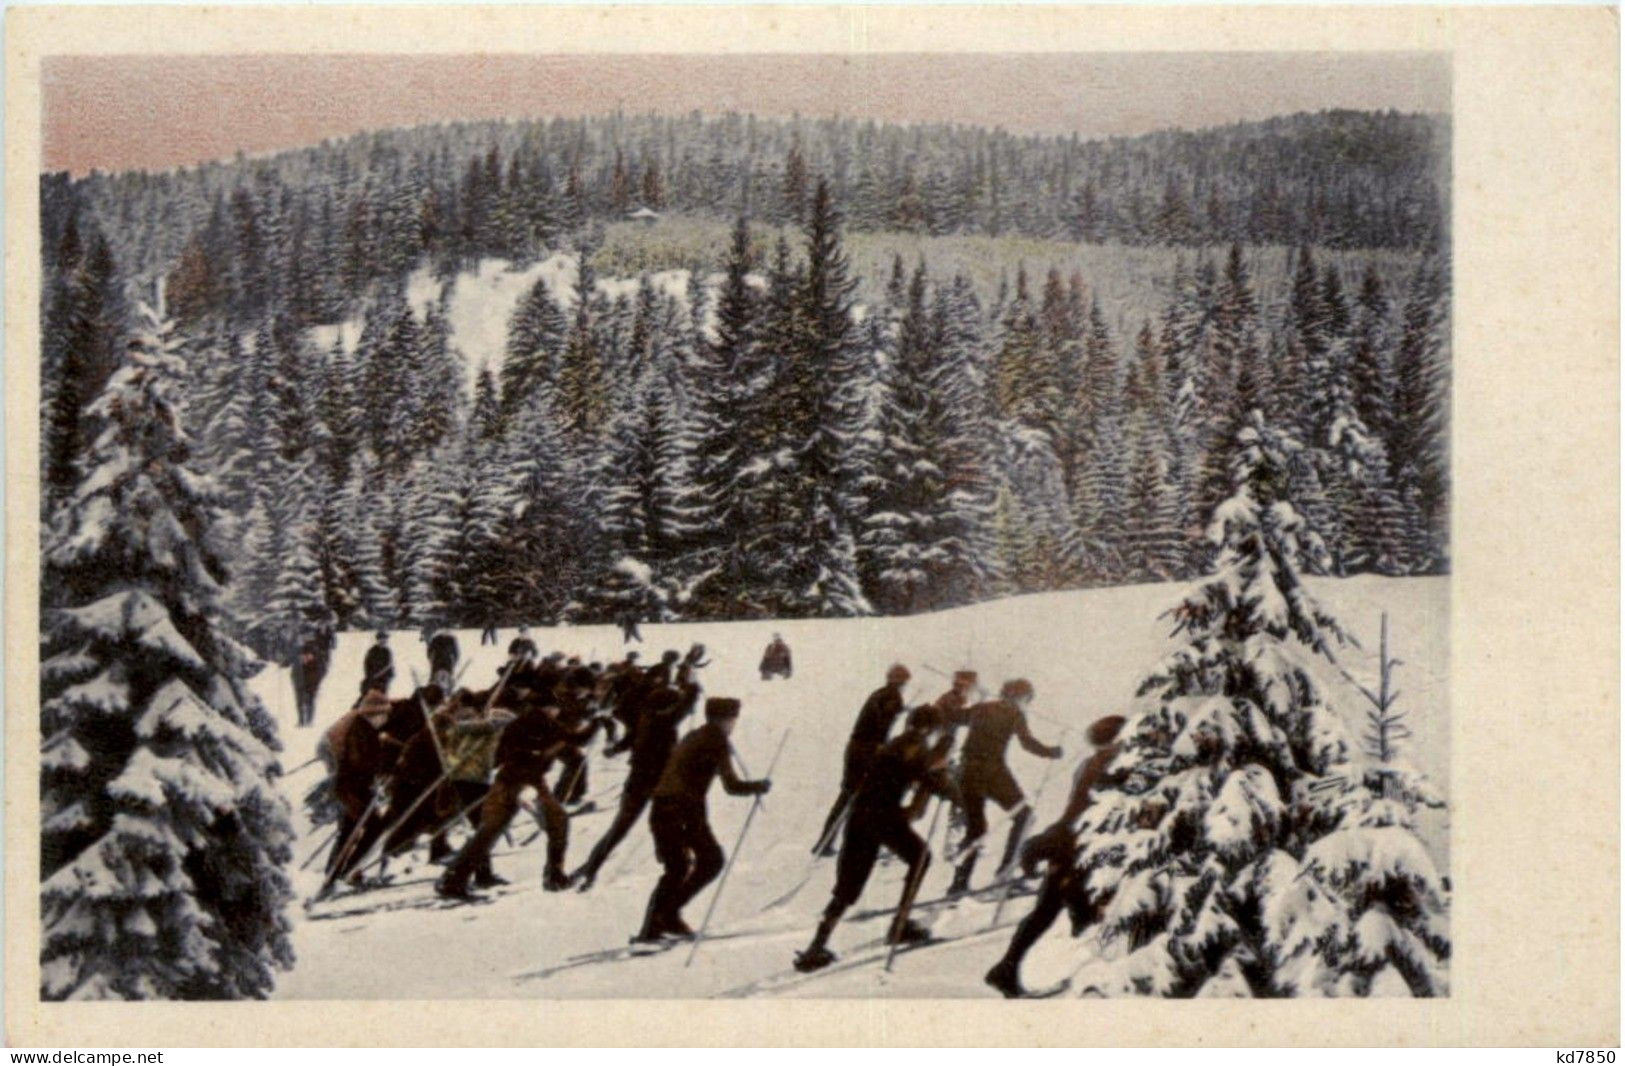 Langlauf - Winter Sports